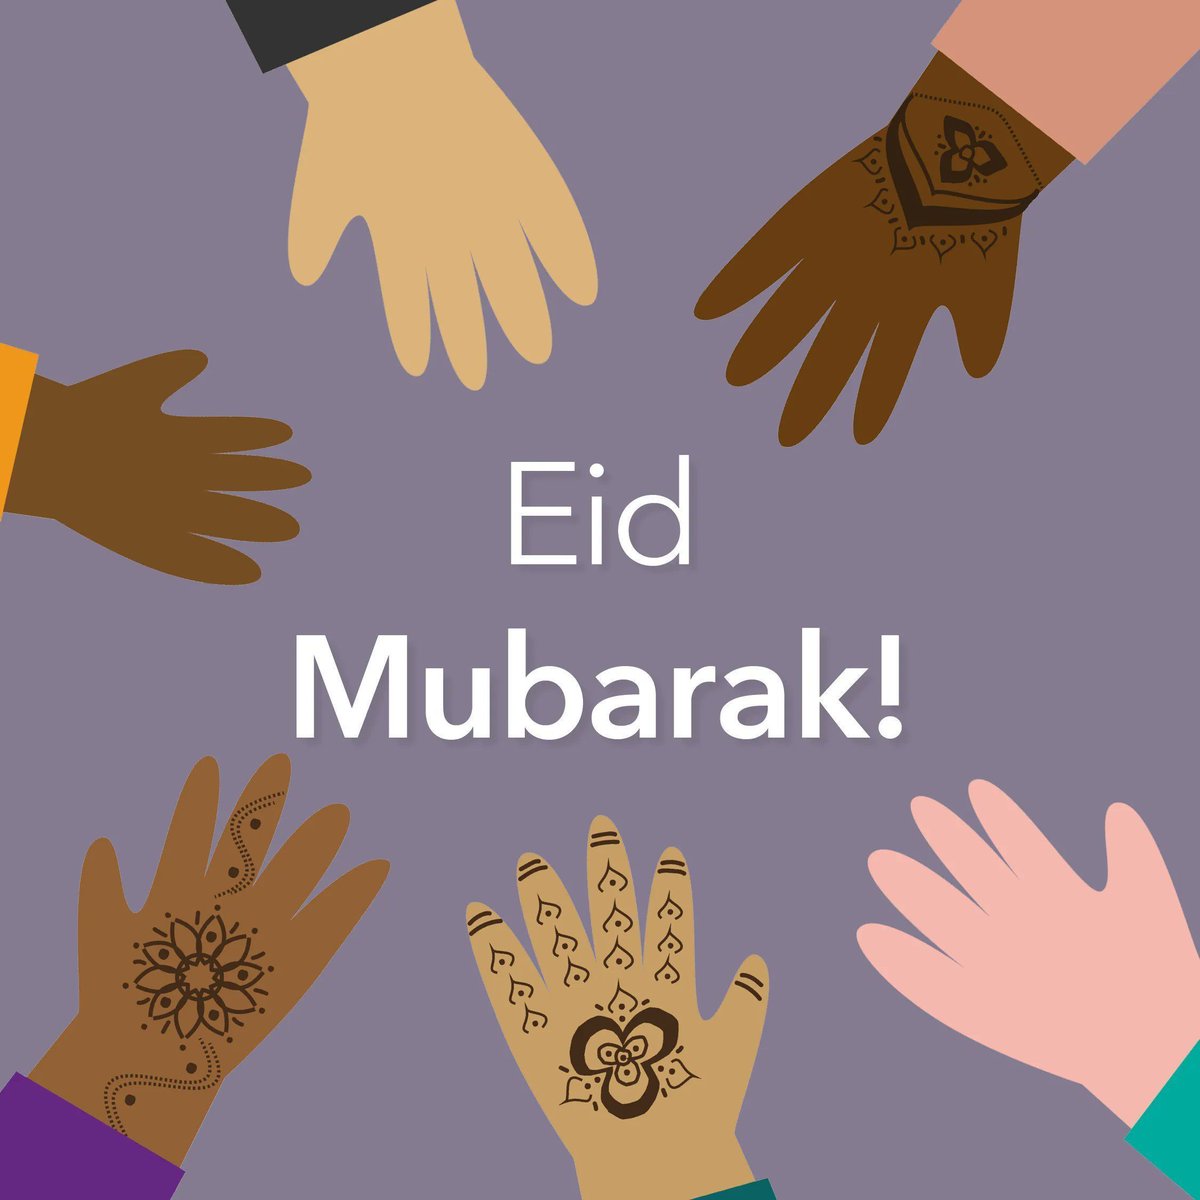 Eid Mubarak! We hope all students, parents/carers, staff and the local community celebrating it has a wonderful day. #EidMubarak